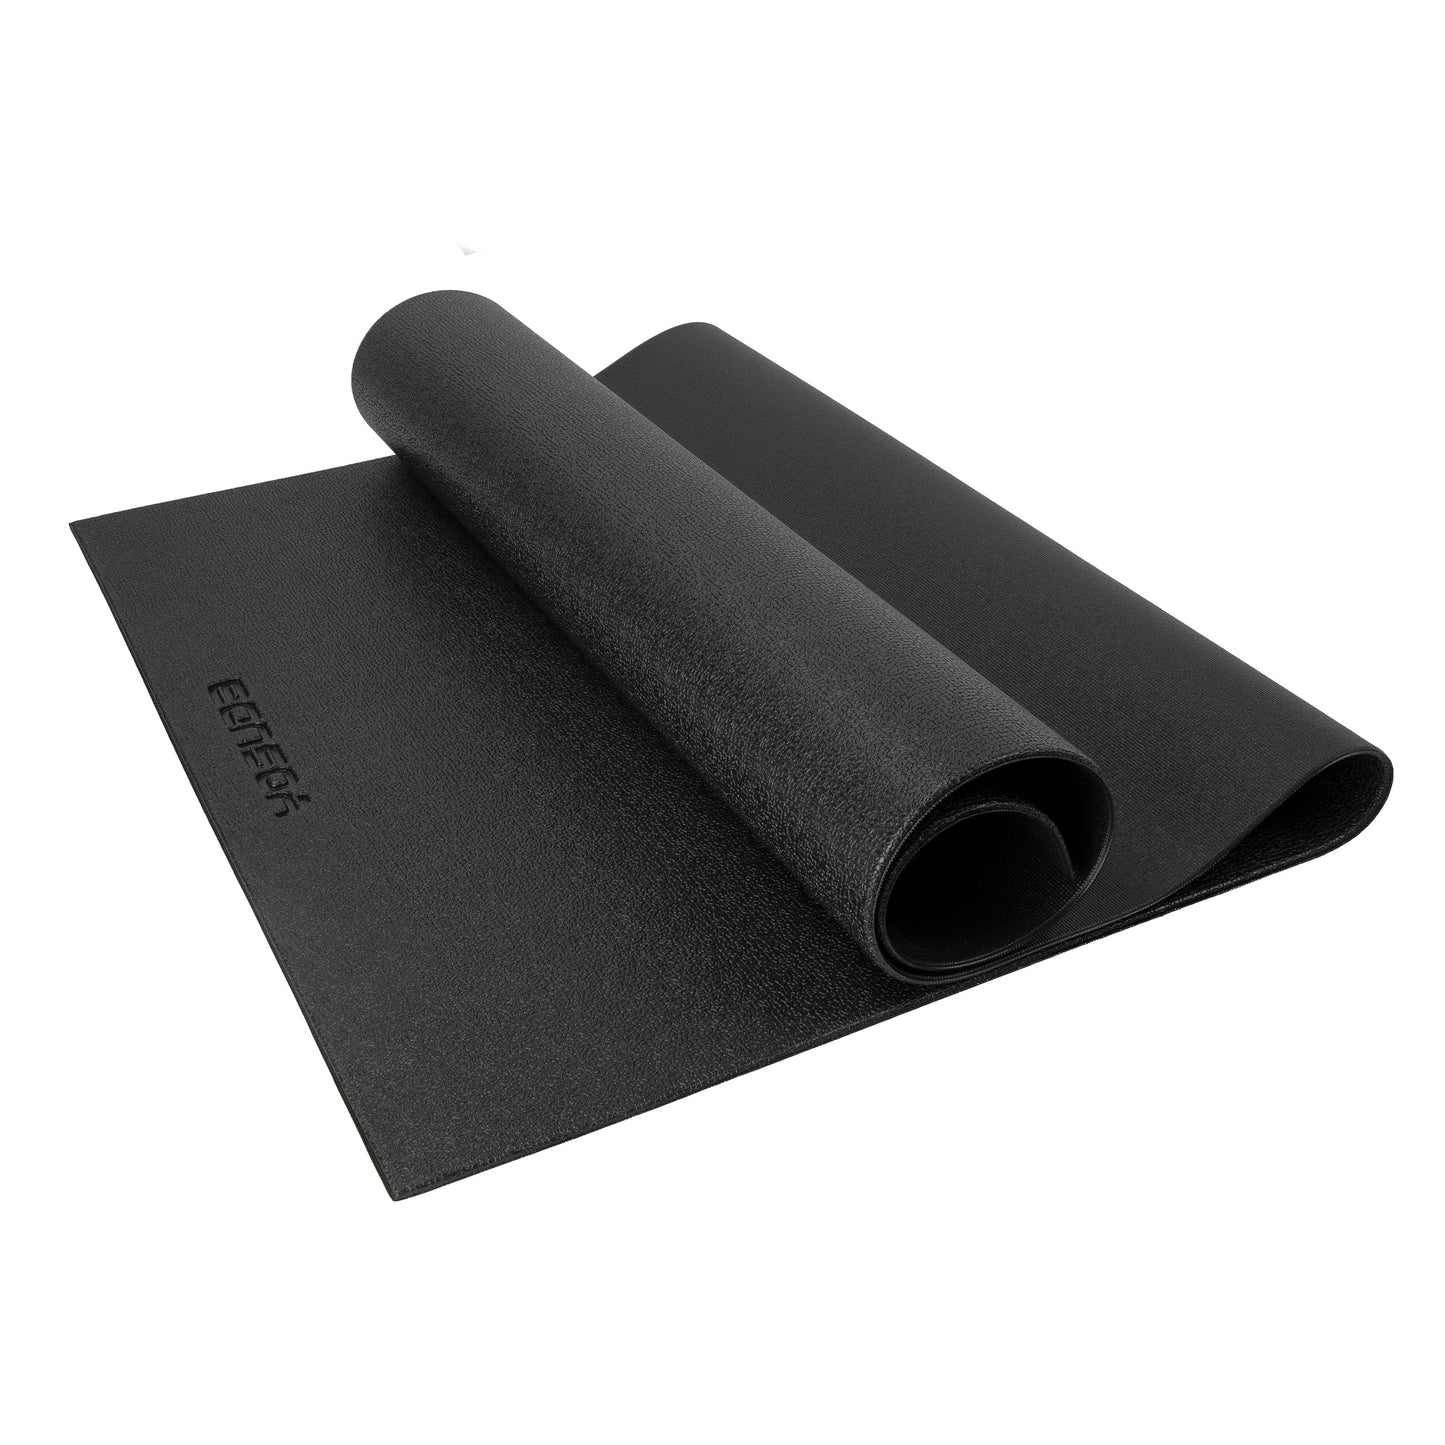 YOSUDA Floor Protector Mat for Exercise Equipment